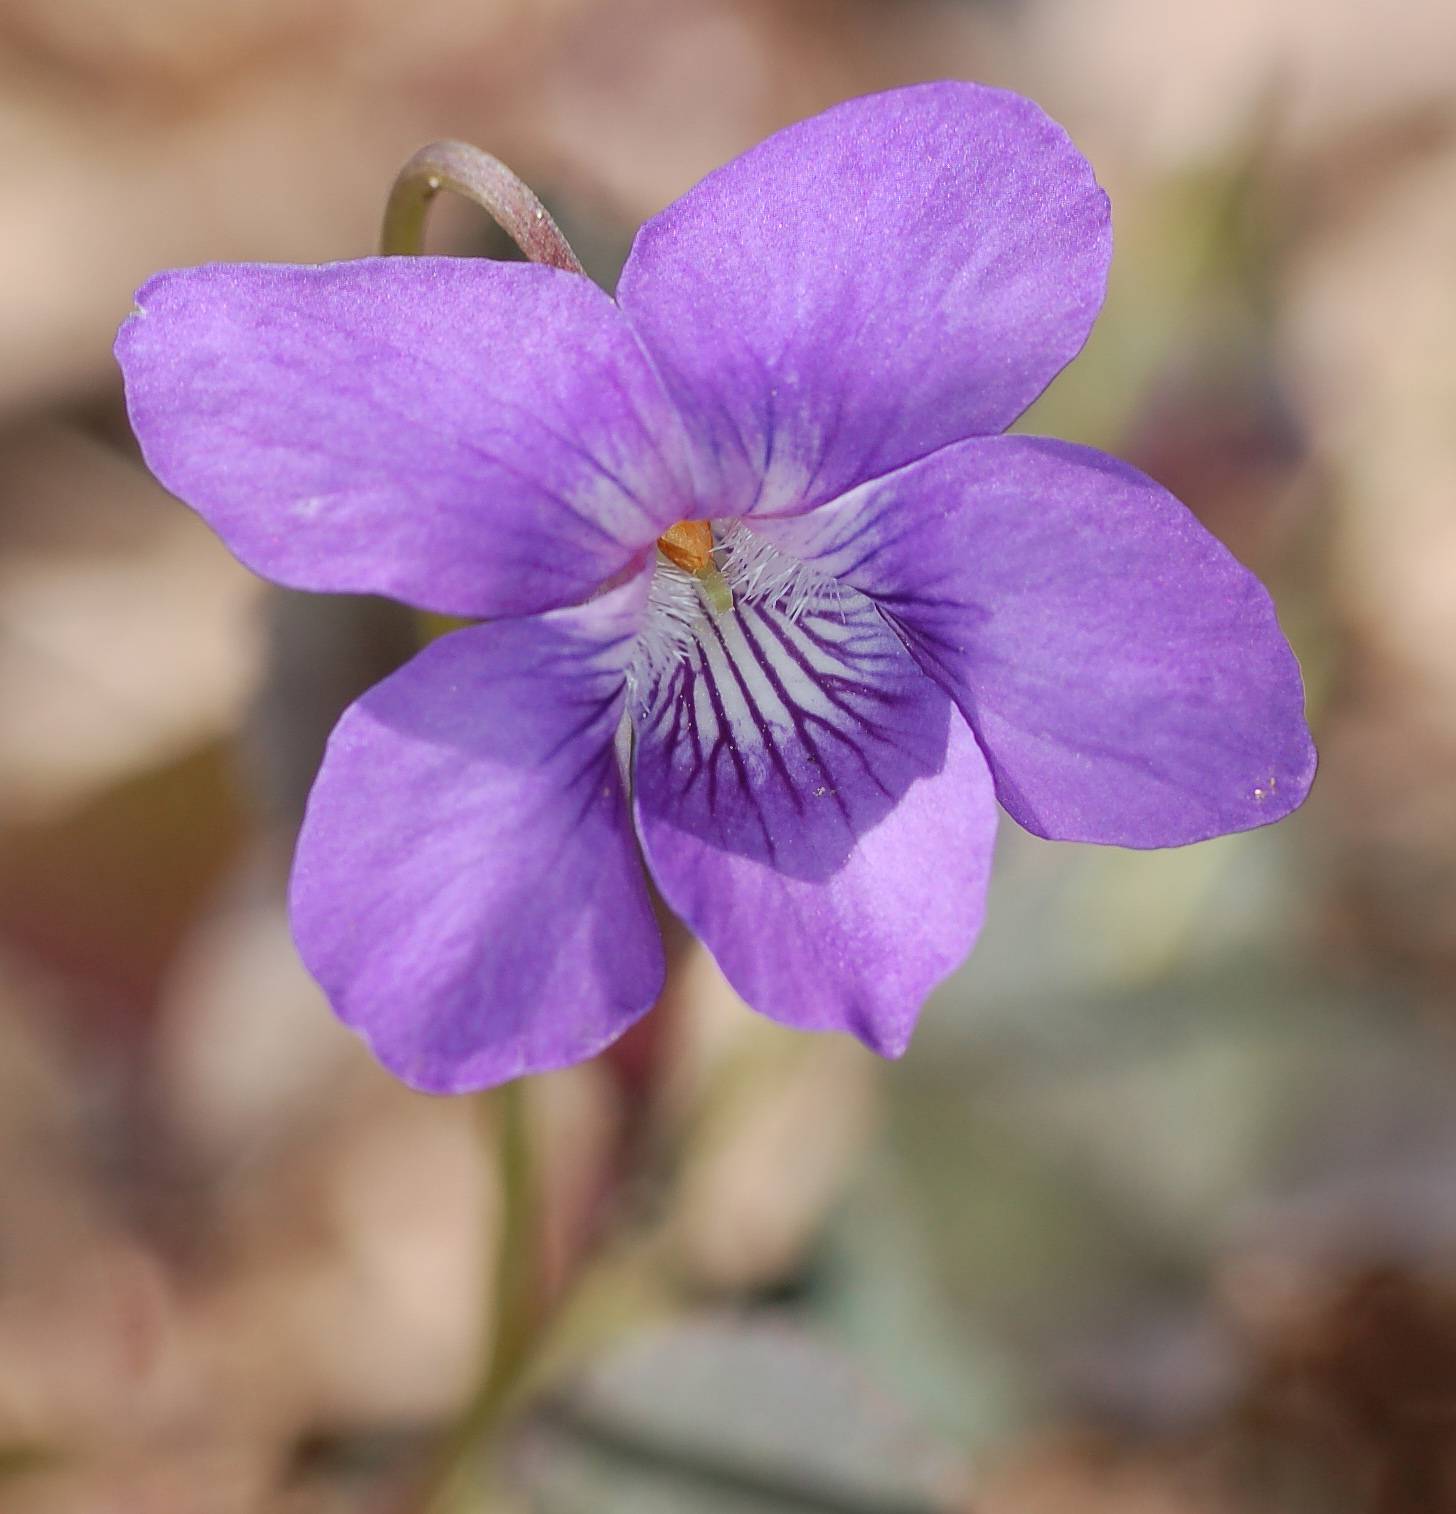 A violet flower photo